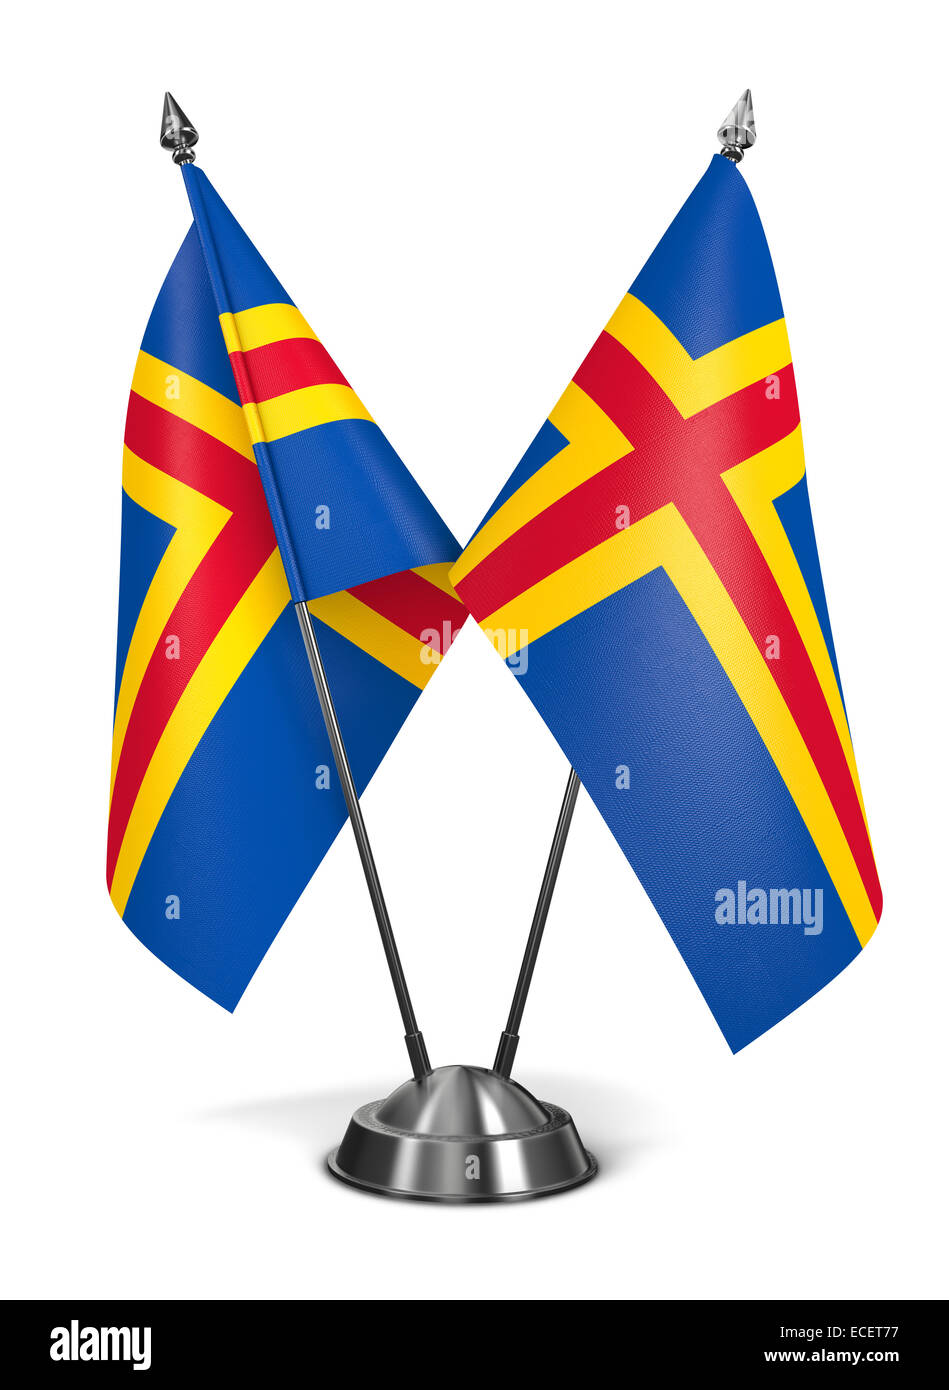 Aland - Miniatur-Flags. Stockfoto